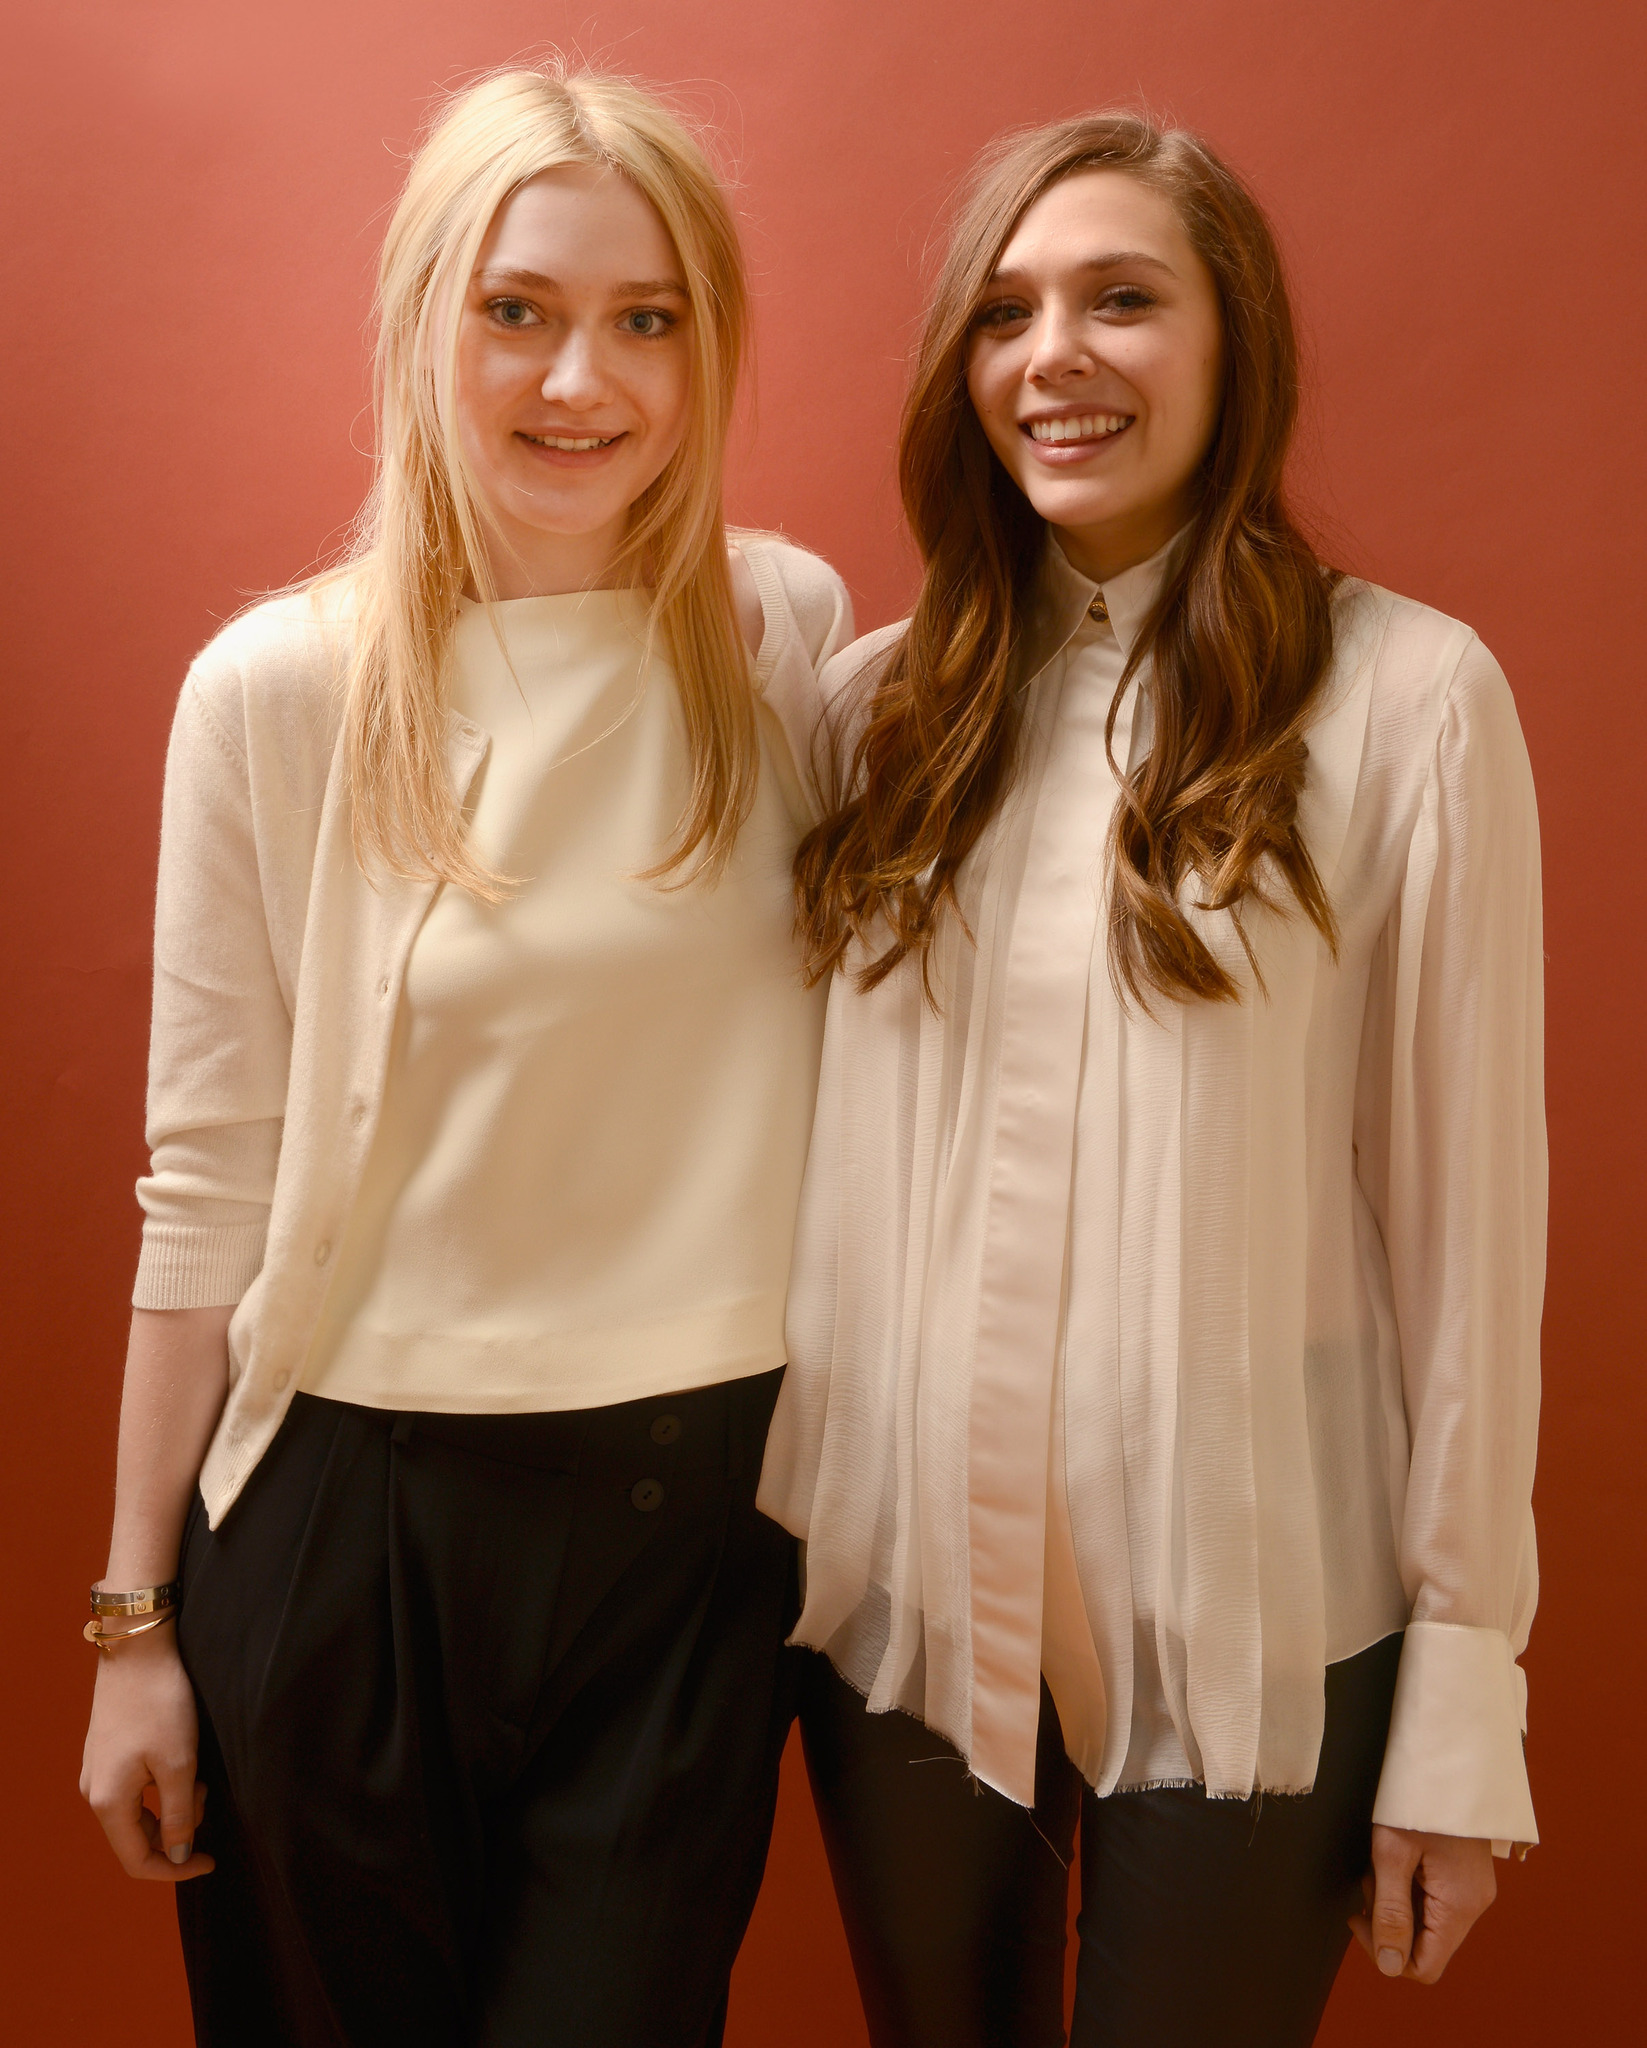 Dakota Fanning and Elizabeth Olsen at event of Very Good Girls (2013)